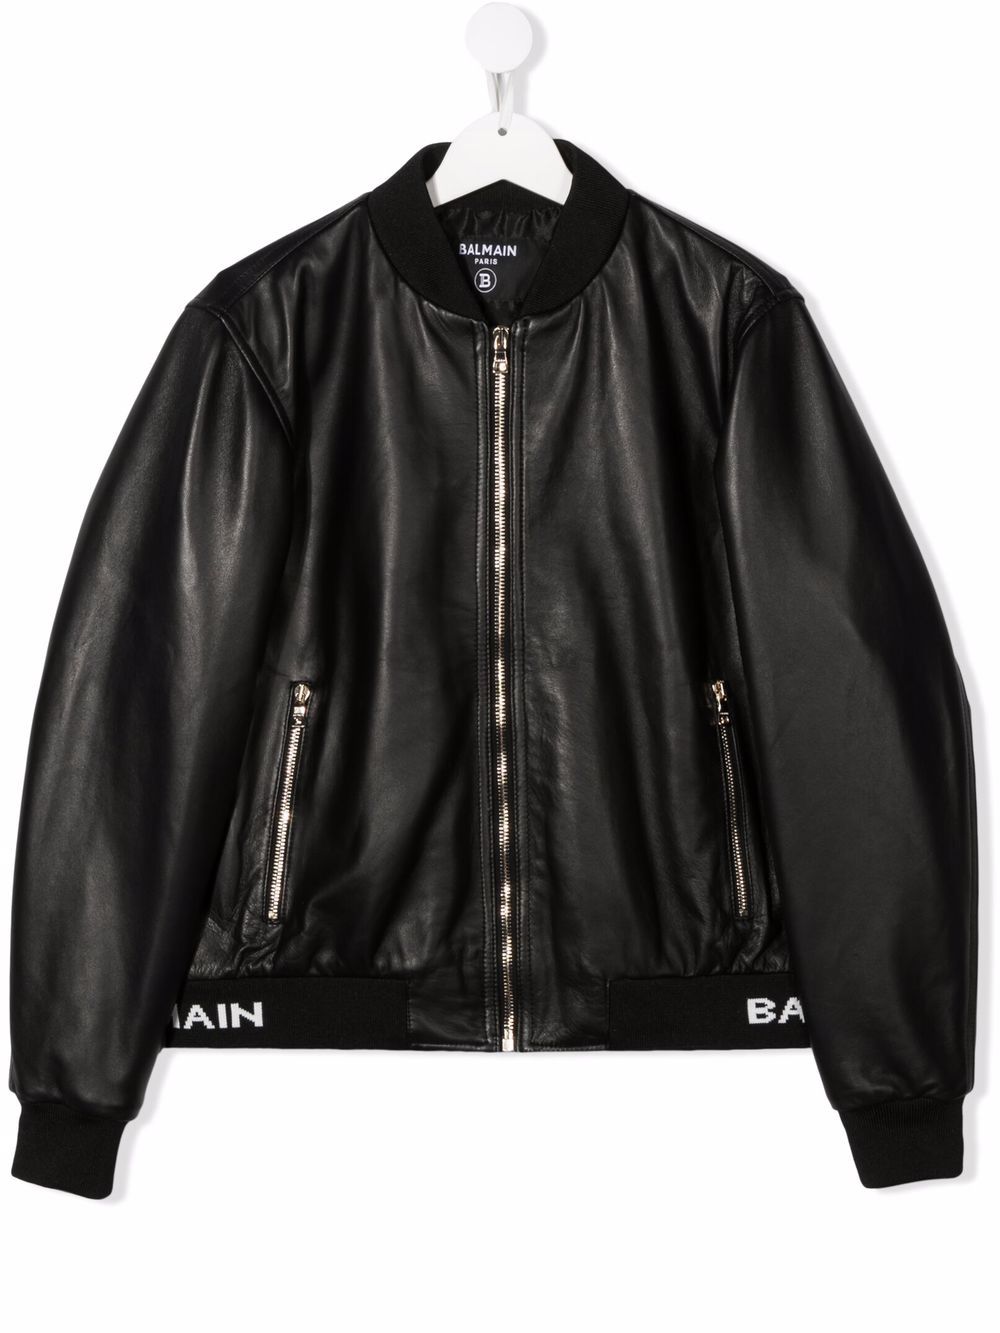 Black leather jacket for girls